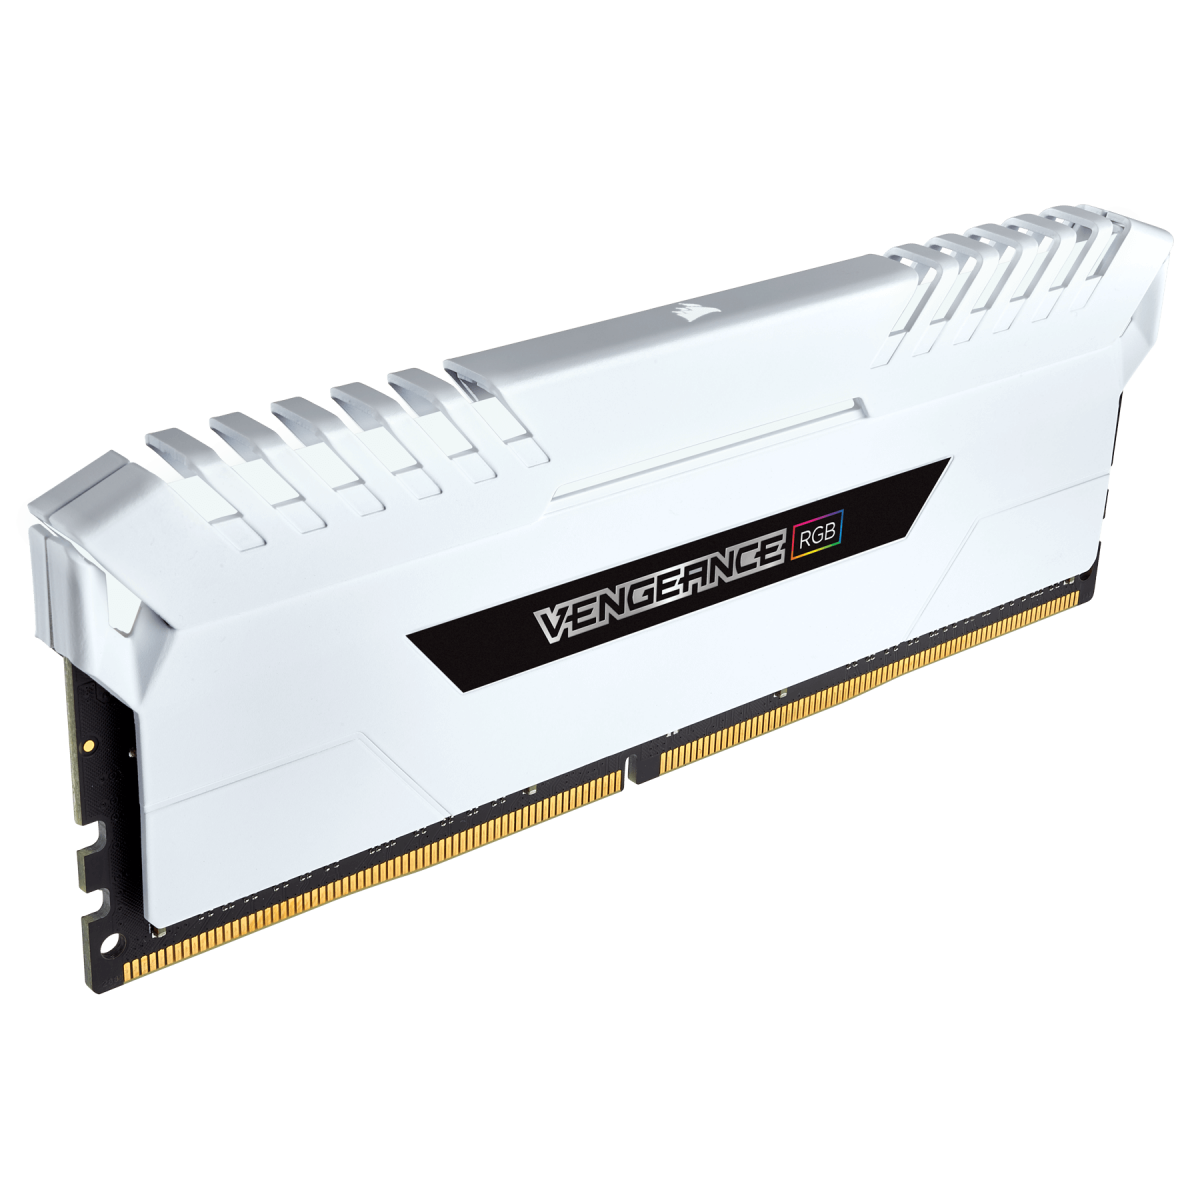 Memória DDR4 Corsair Vengeance, LED RGB, 16GB (2x8GB) 3000MHz, White, CMR16GX4M2C3000C15W